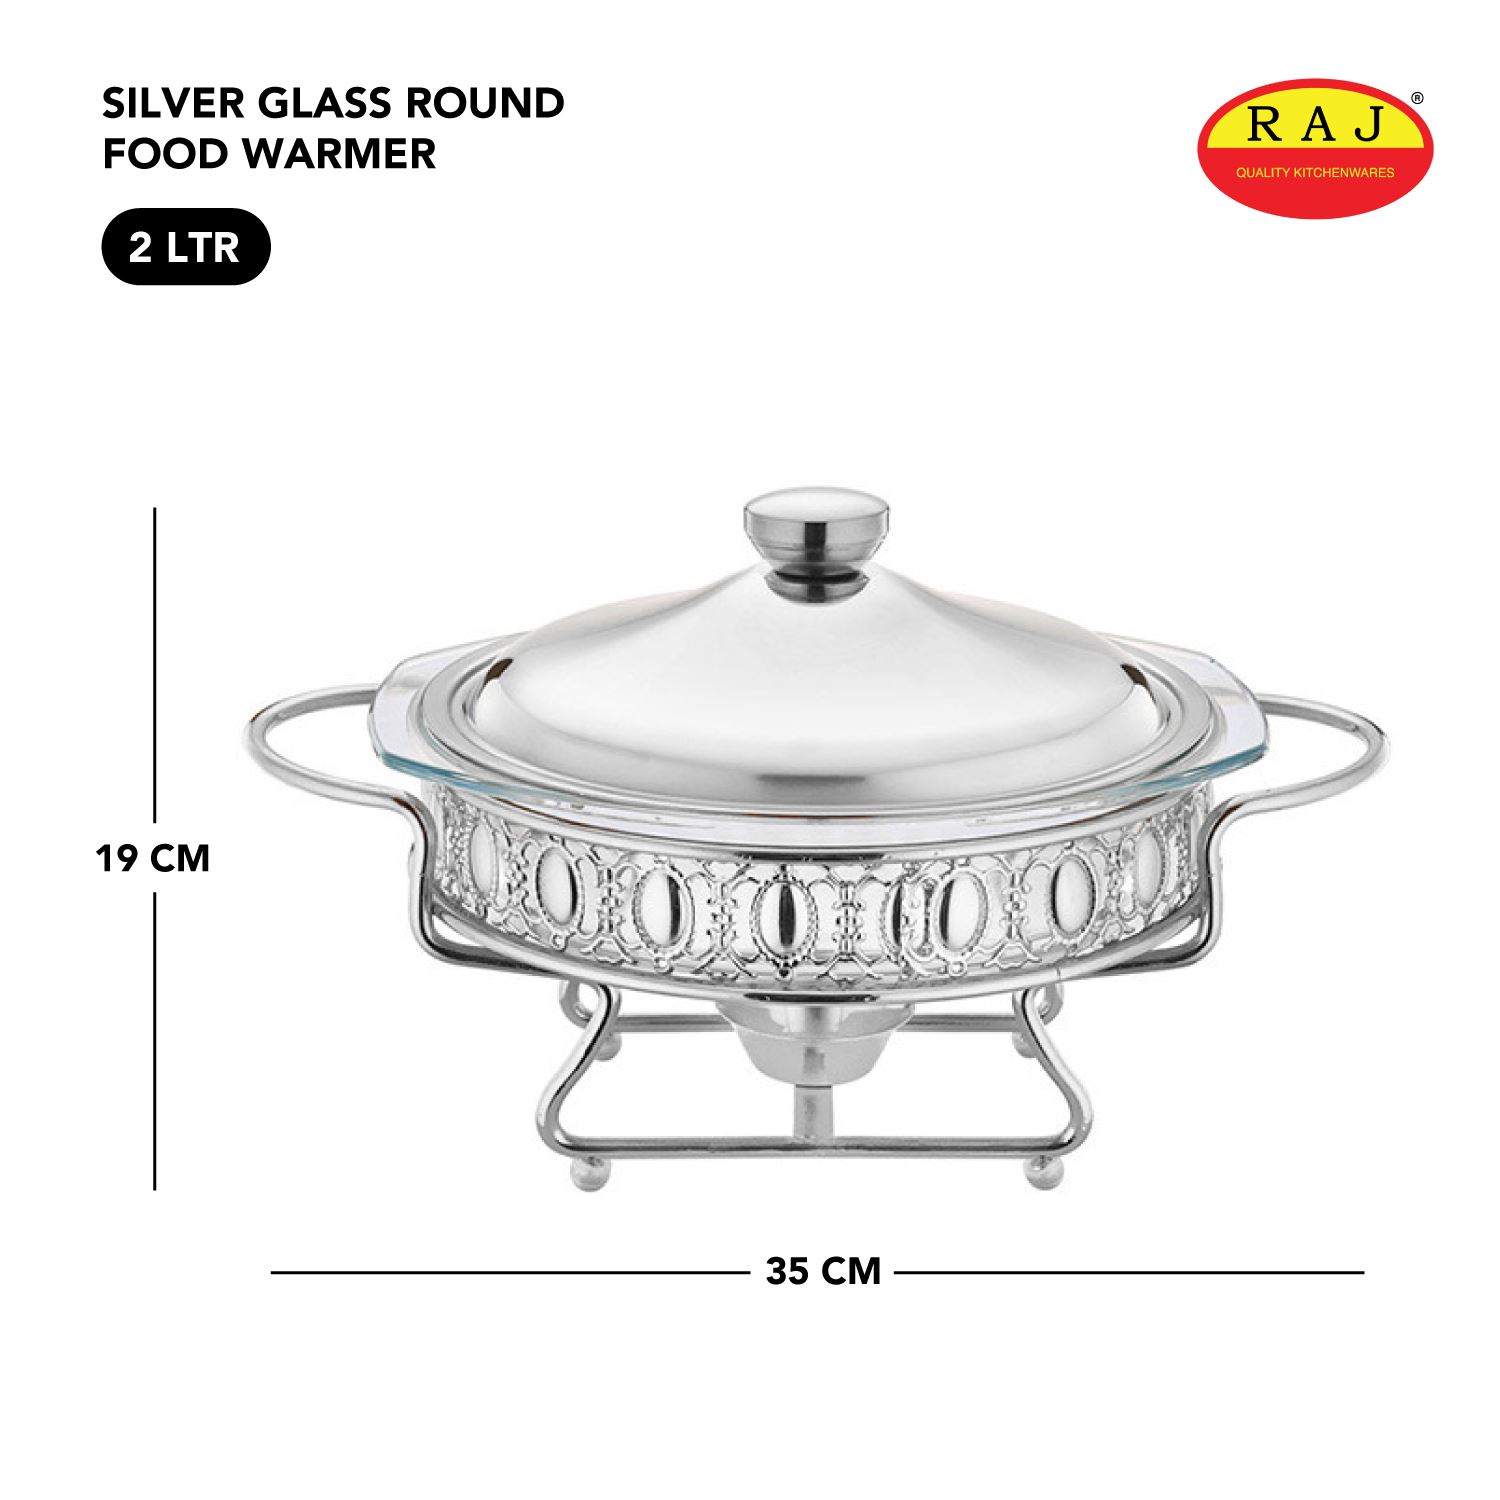 Raj Silver Glass Round Food Warmer 2.0 LTR